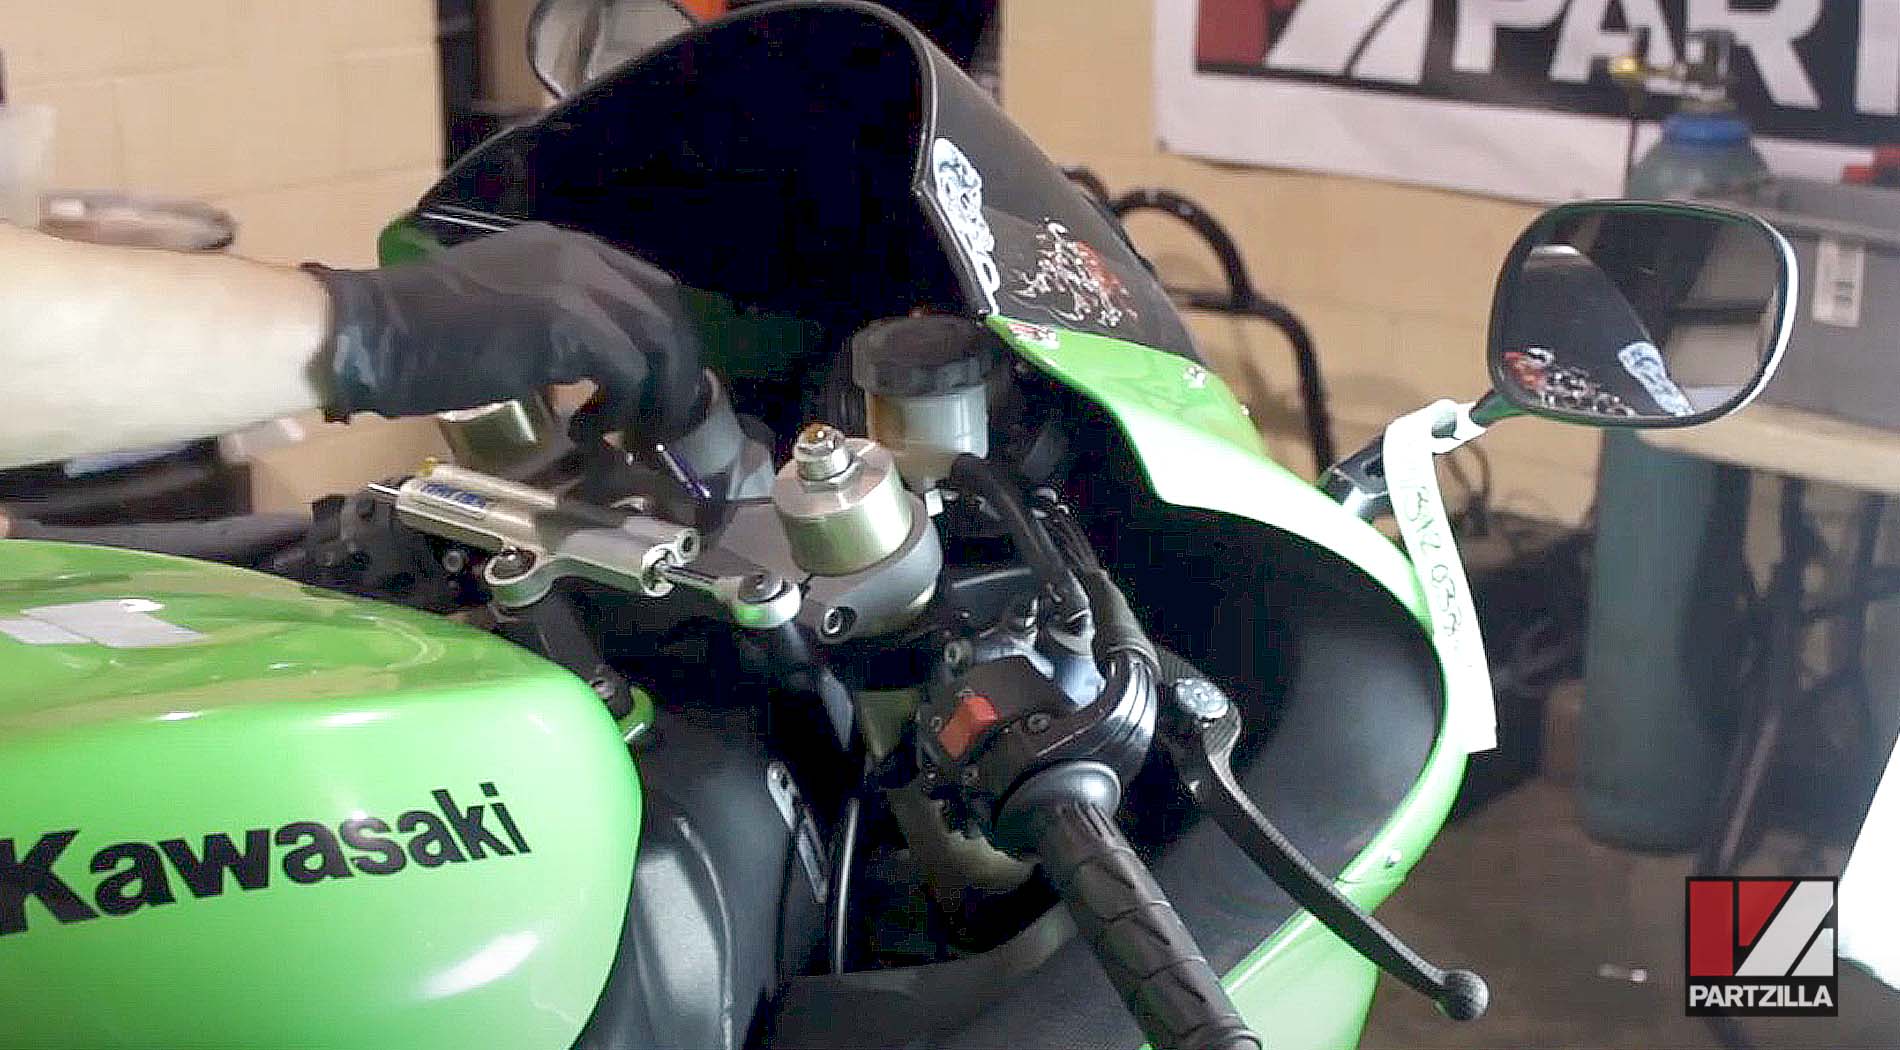 2006 Kawasaki Ninja ZX10R motorcycle engine oil change service